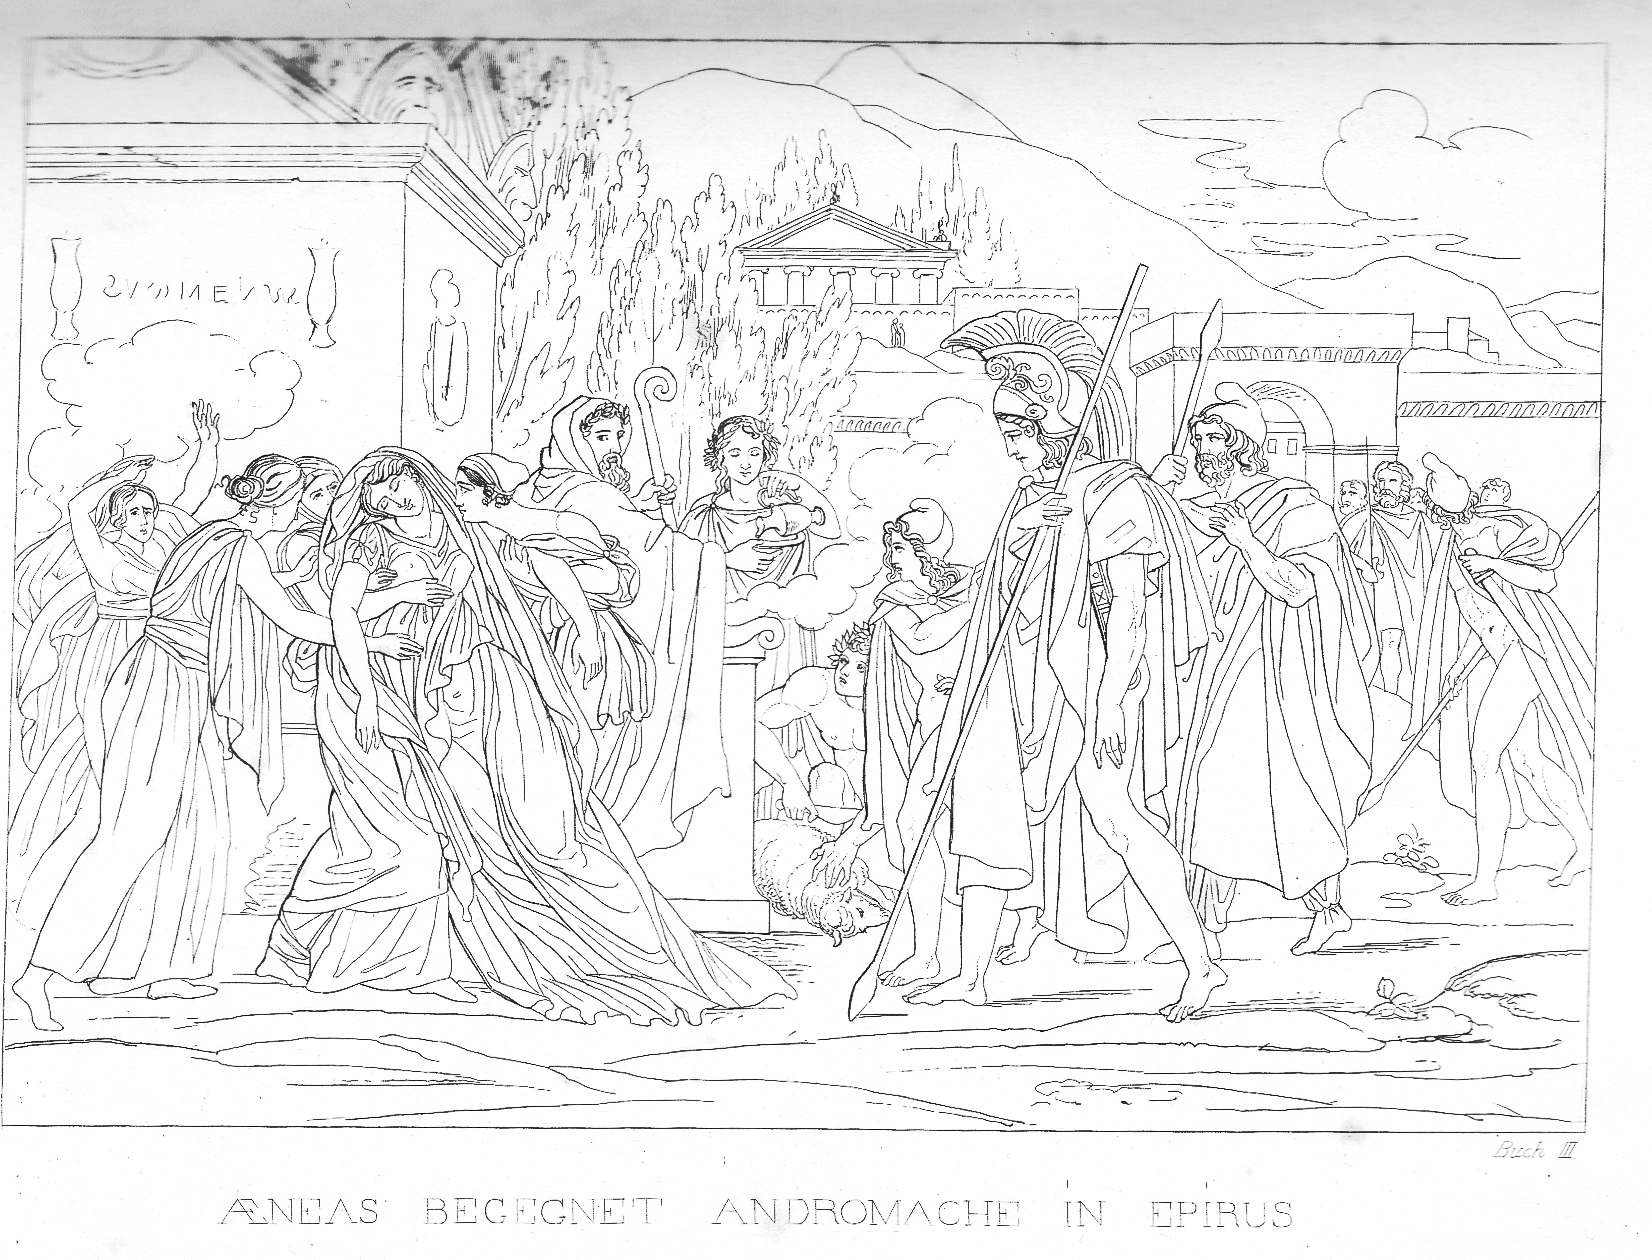 Aeneas begrüßt Andromache (großes Bild)